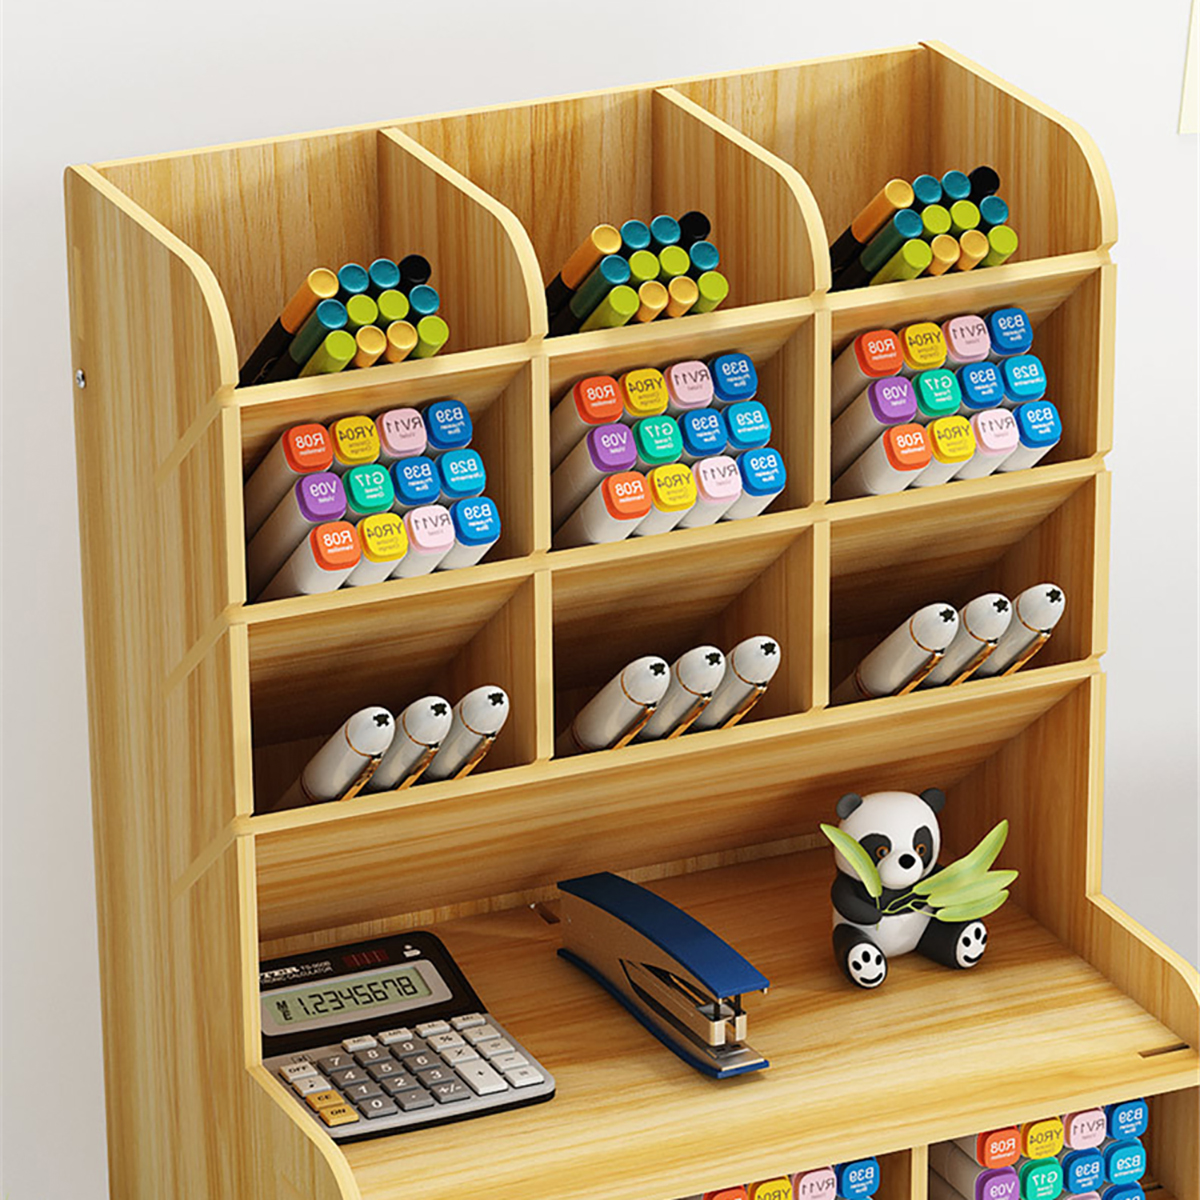 Pen-Holder-Wooden-Pencil-Storage-Holder-Study-Home-Office-Case-Rack-Drawer-1829251-10